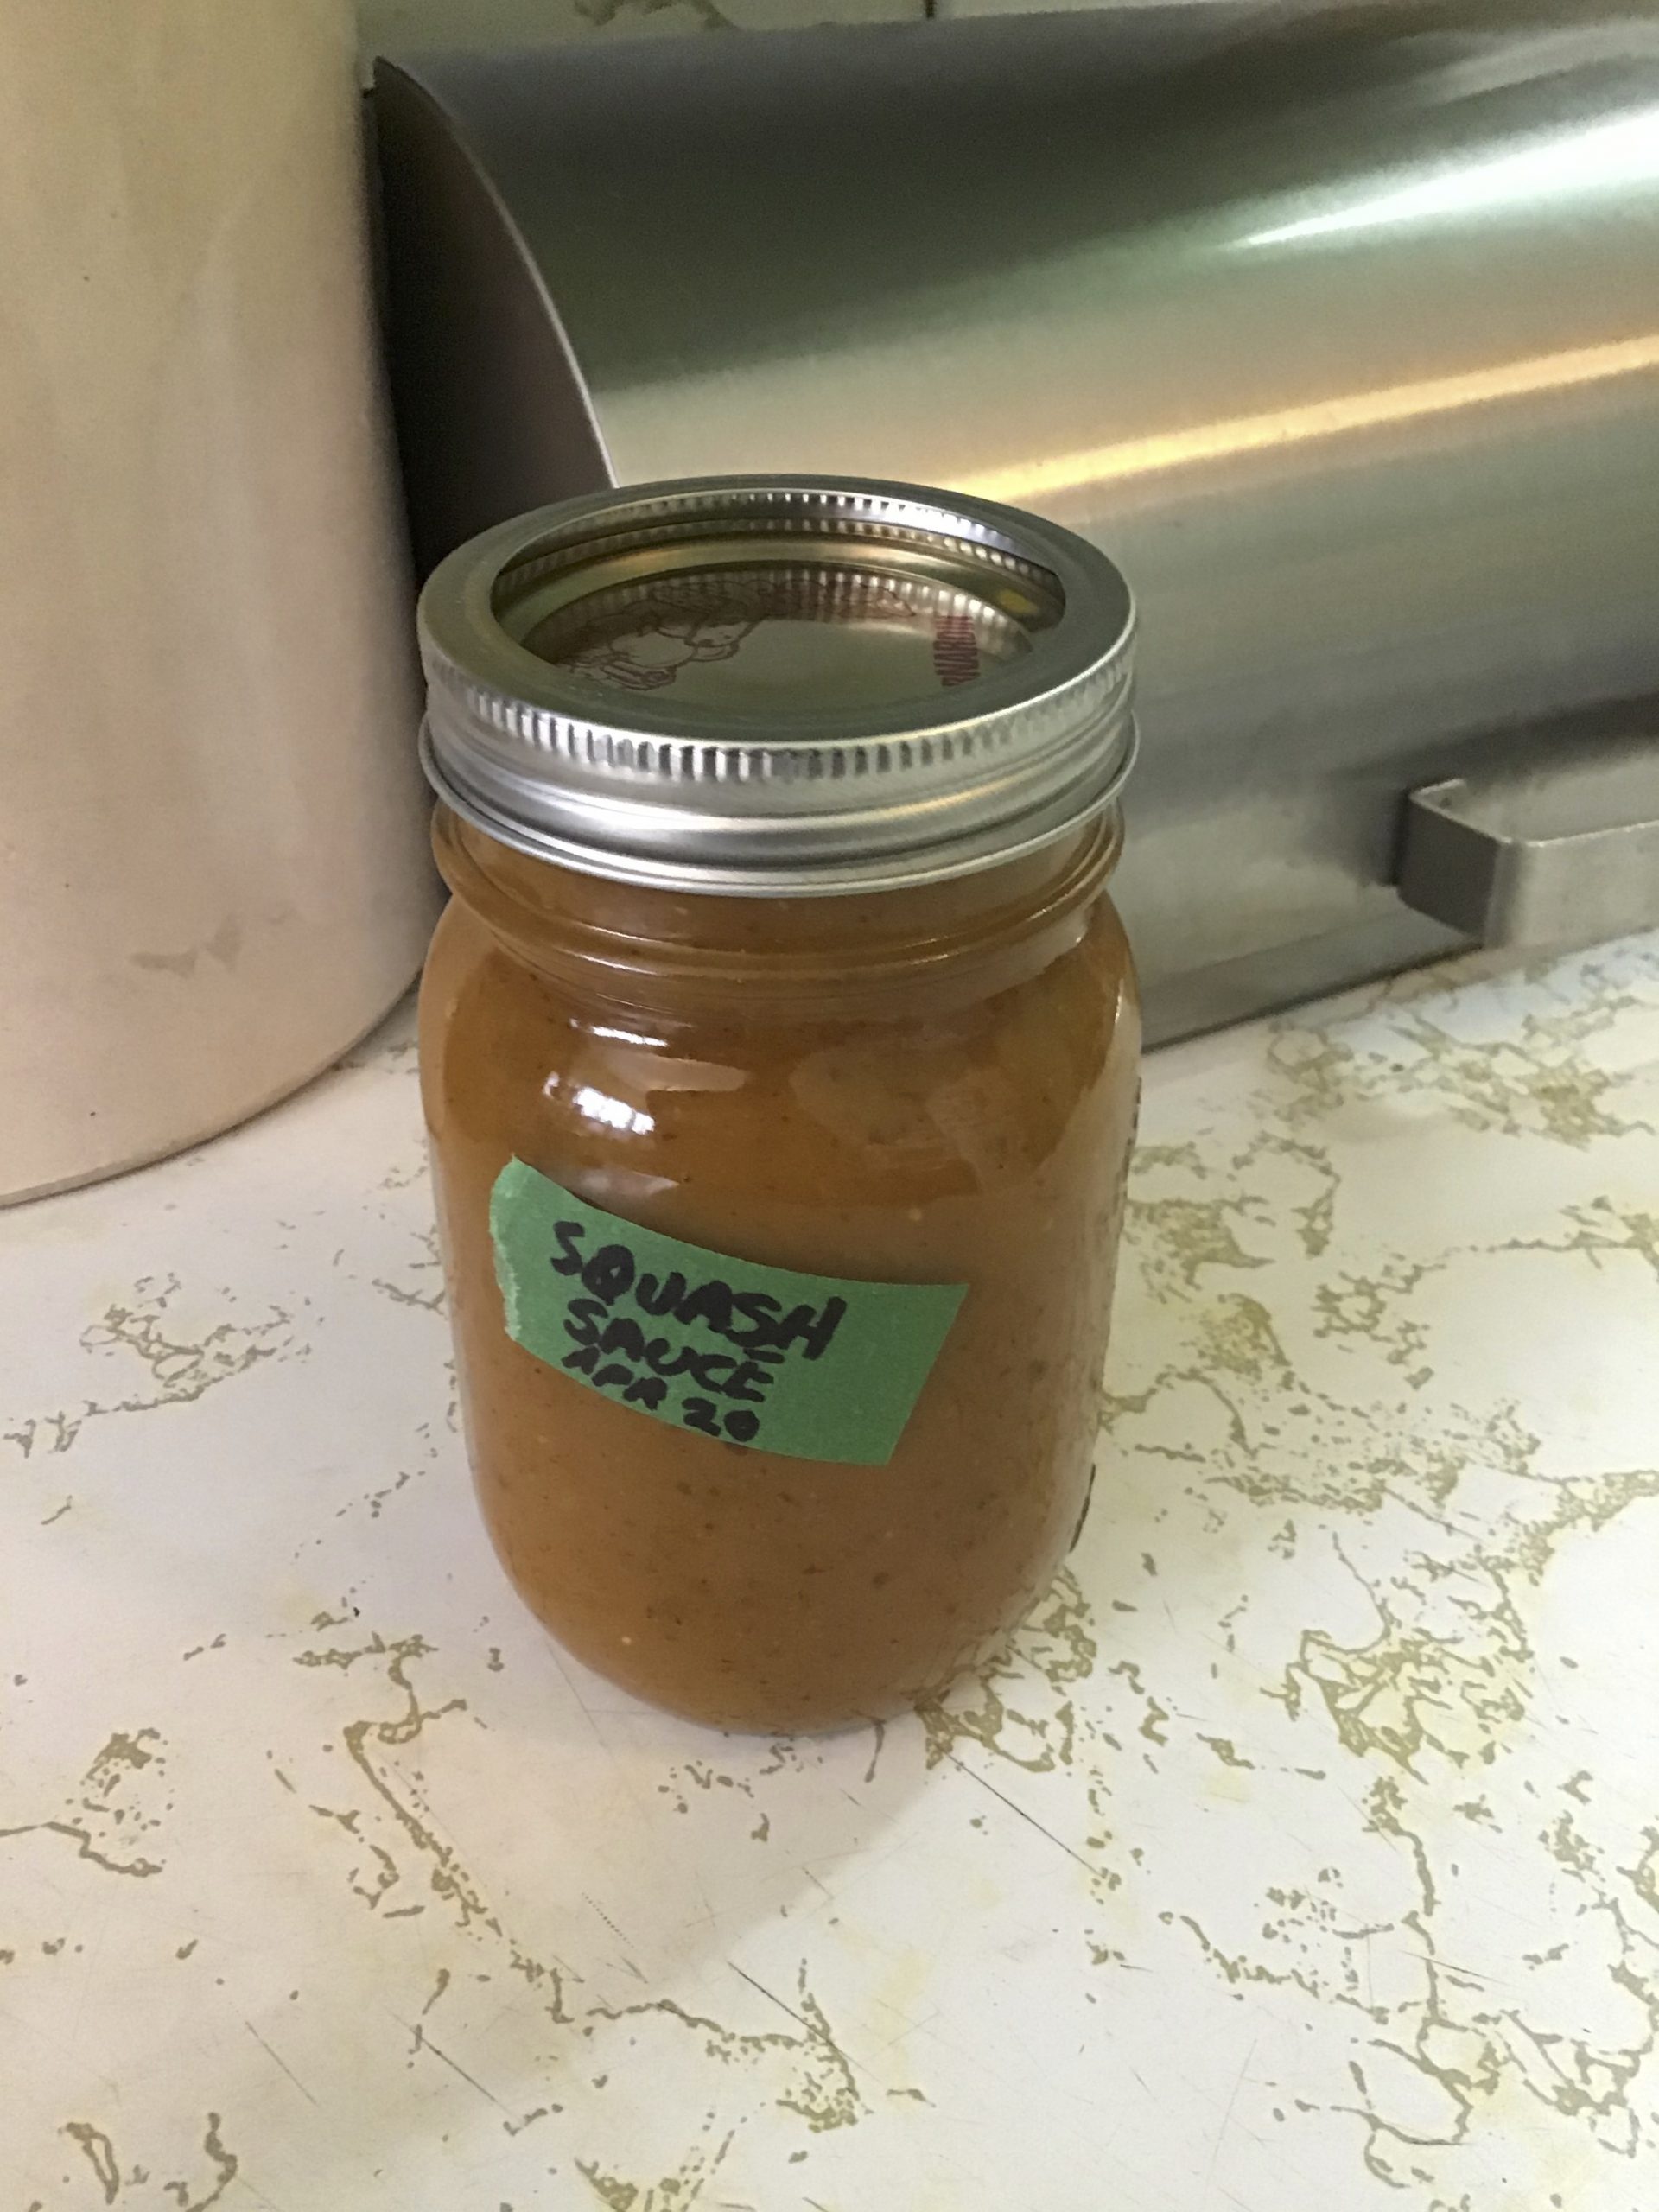 Squash Sauce Maggie’s Own